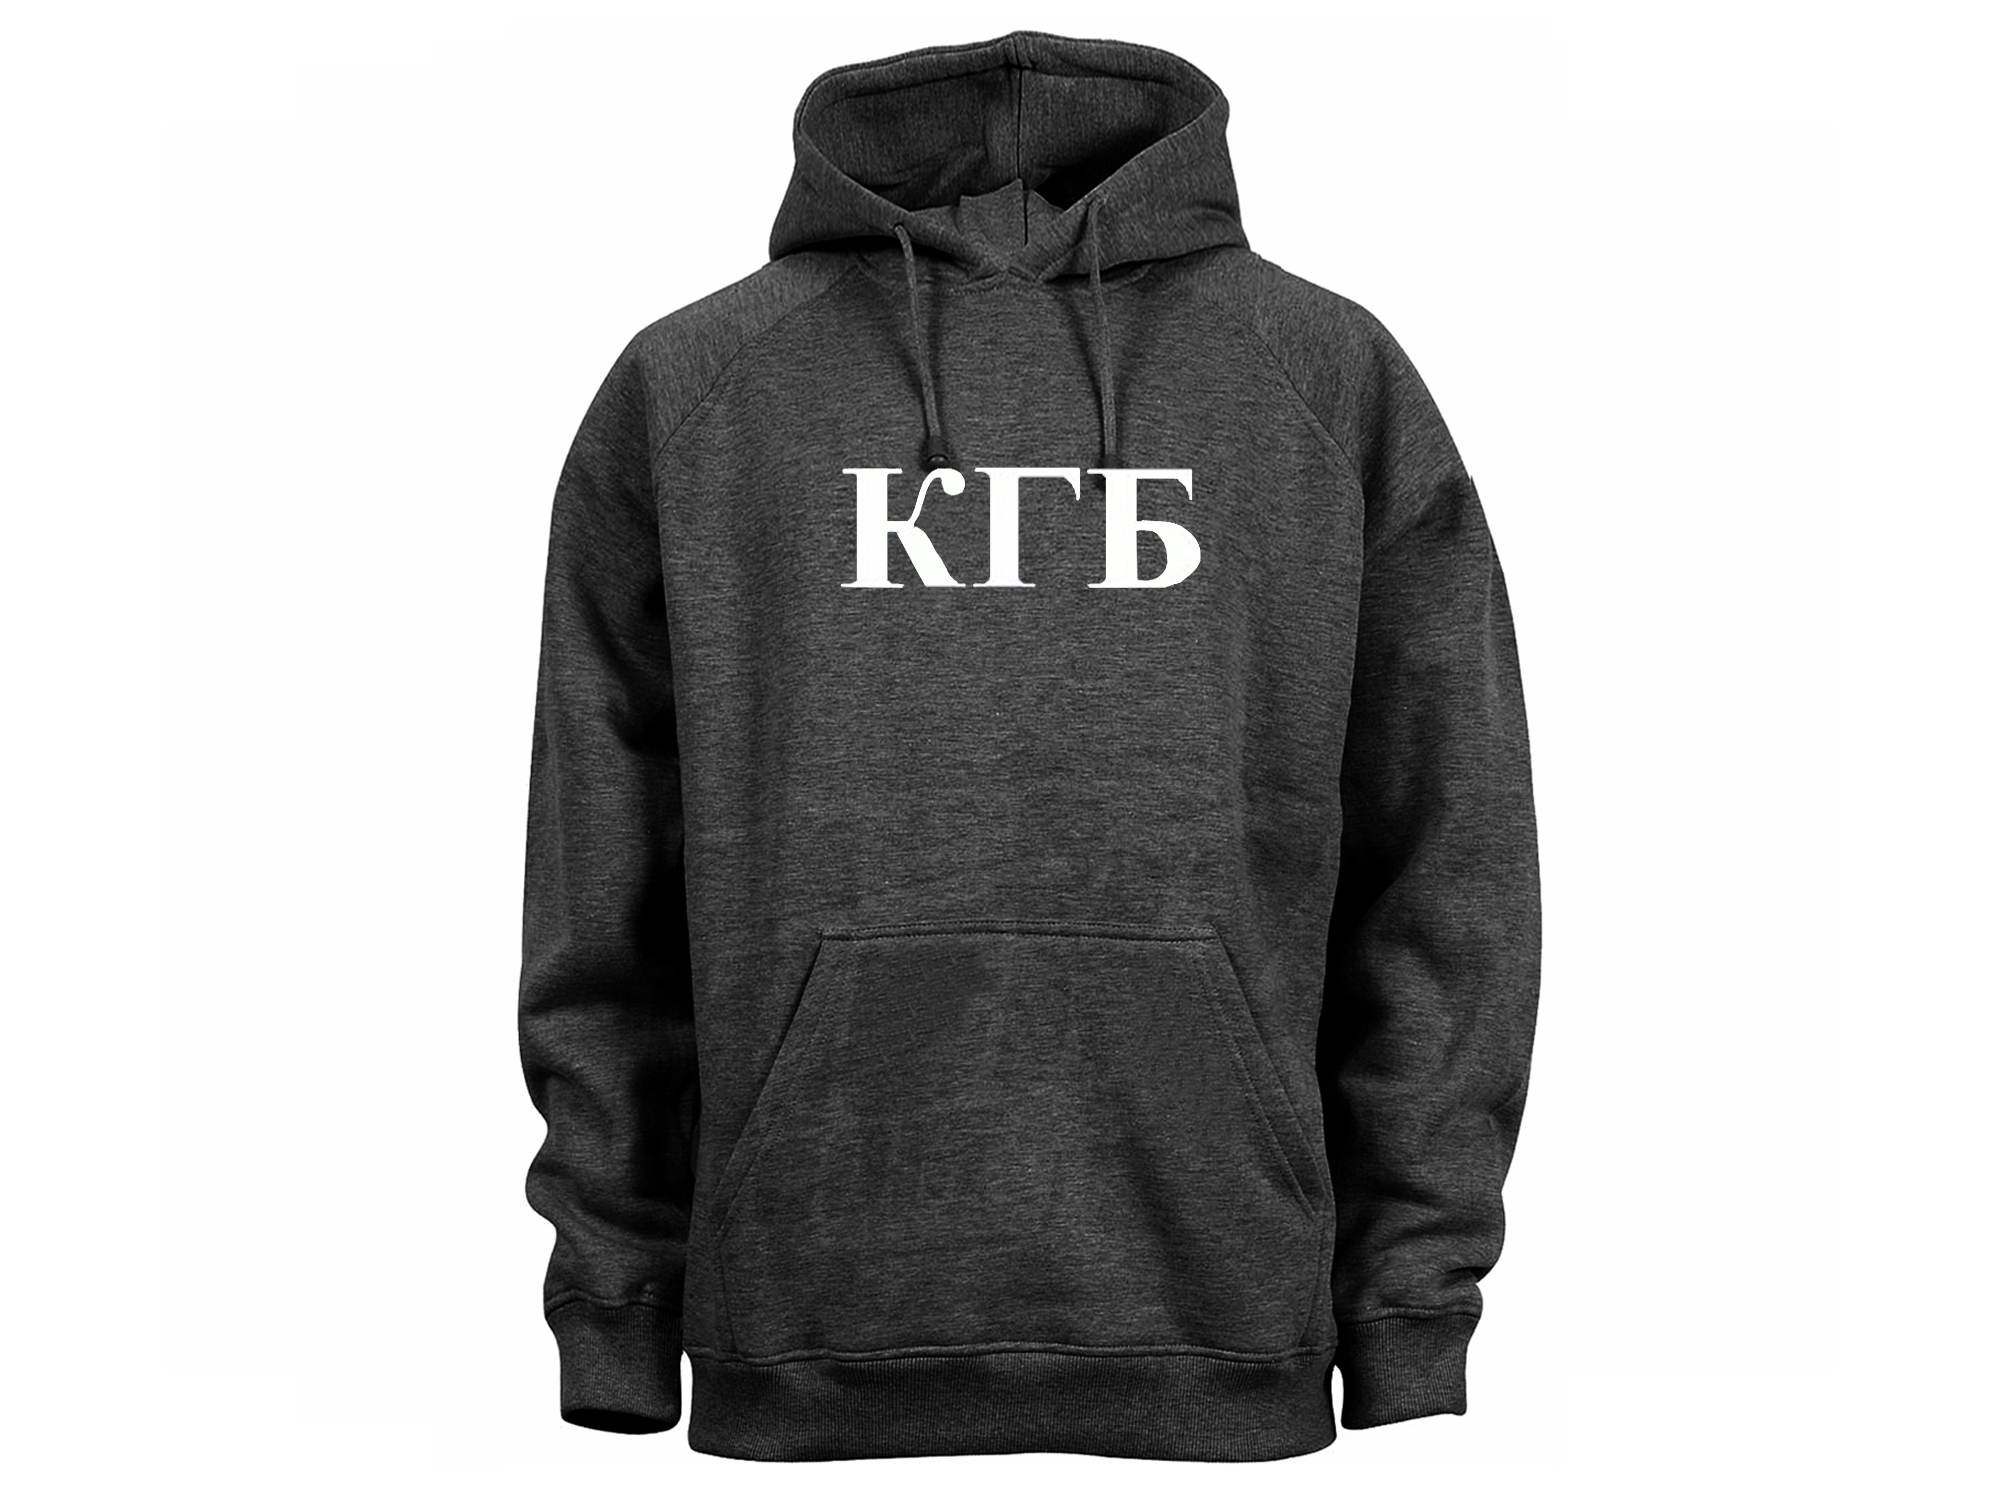 Russian KGB Soviet Union national security agency dark gray new hoodie